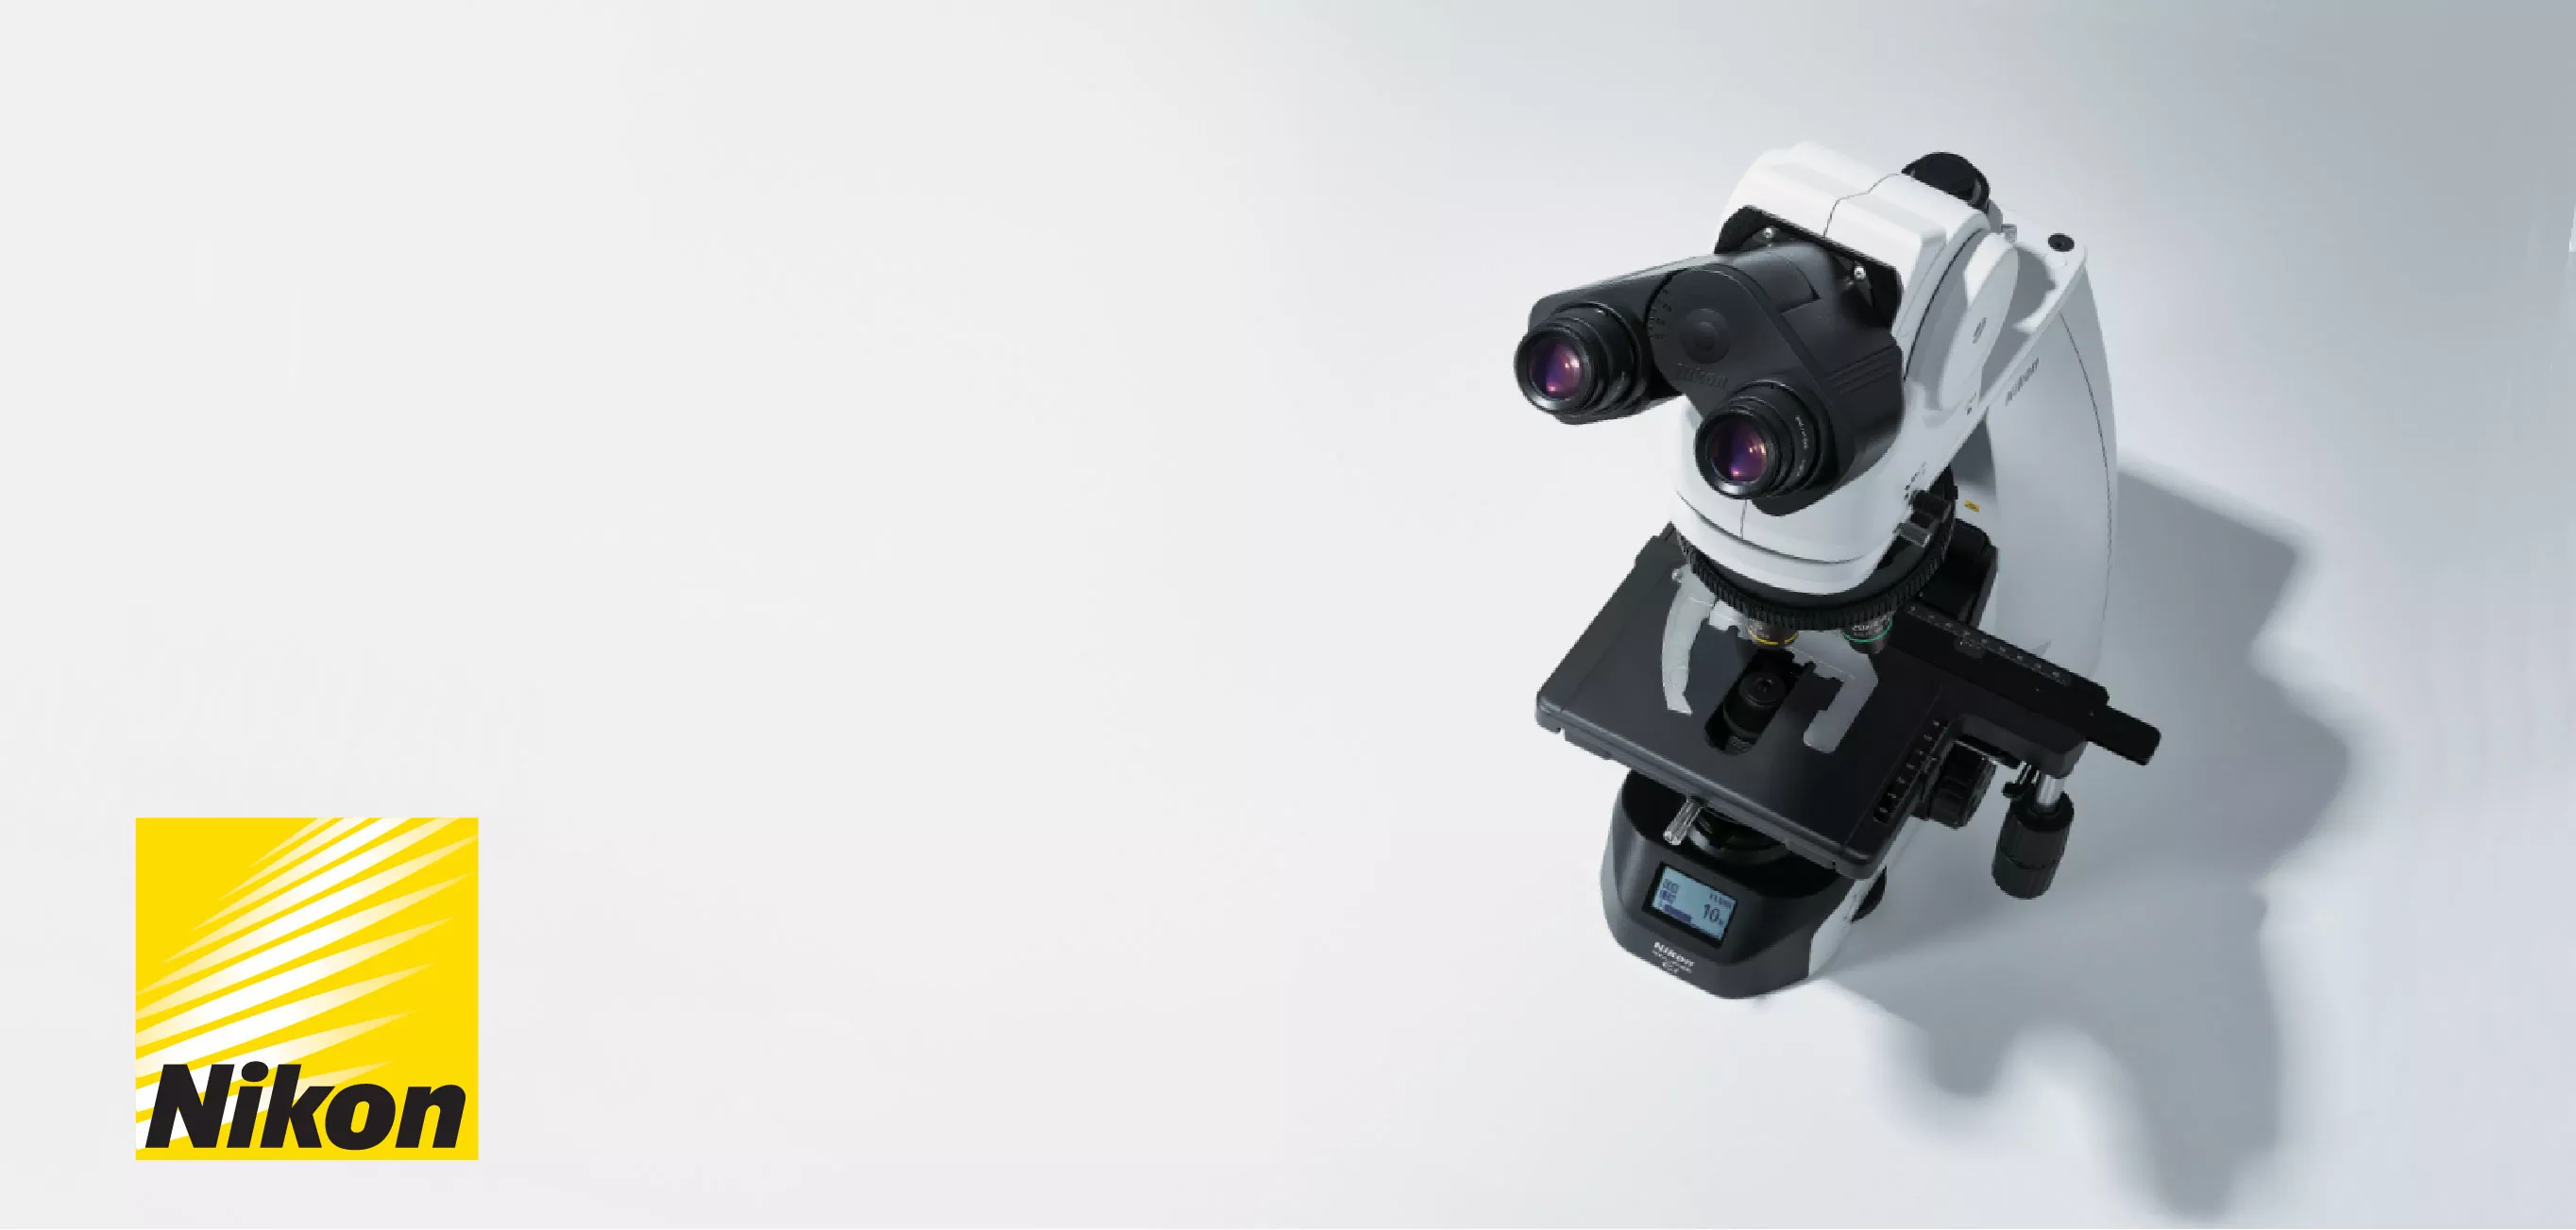 Nikon upright microscope Eclipse Ci-L plus